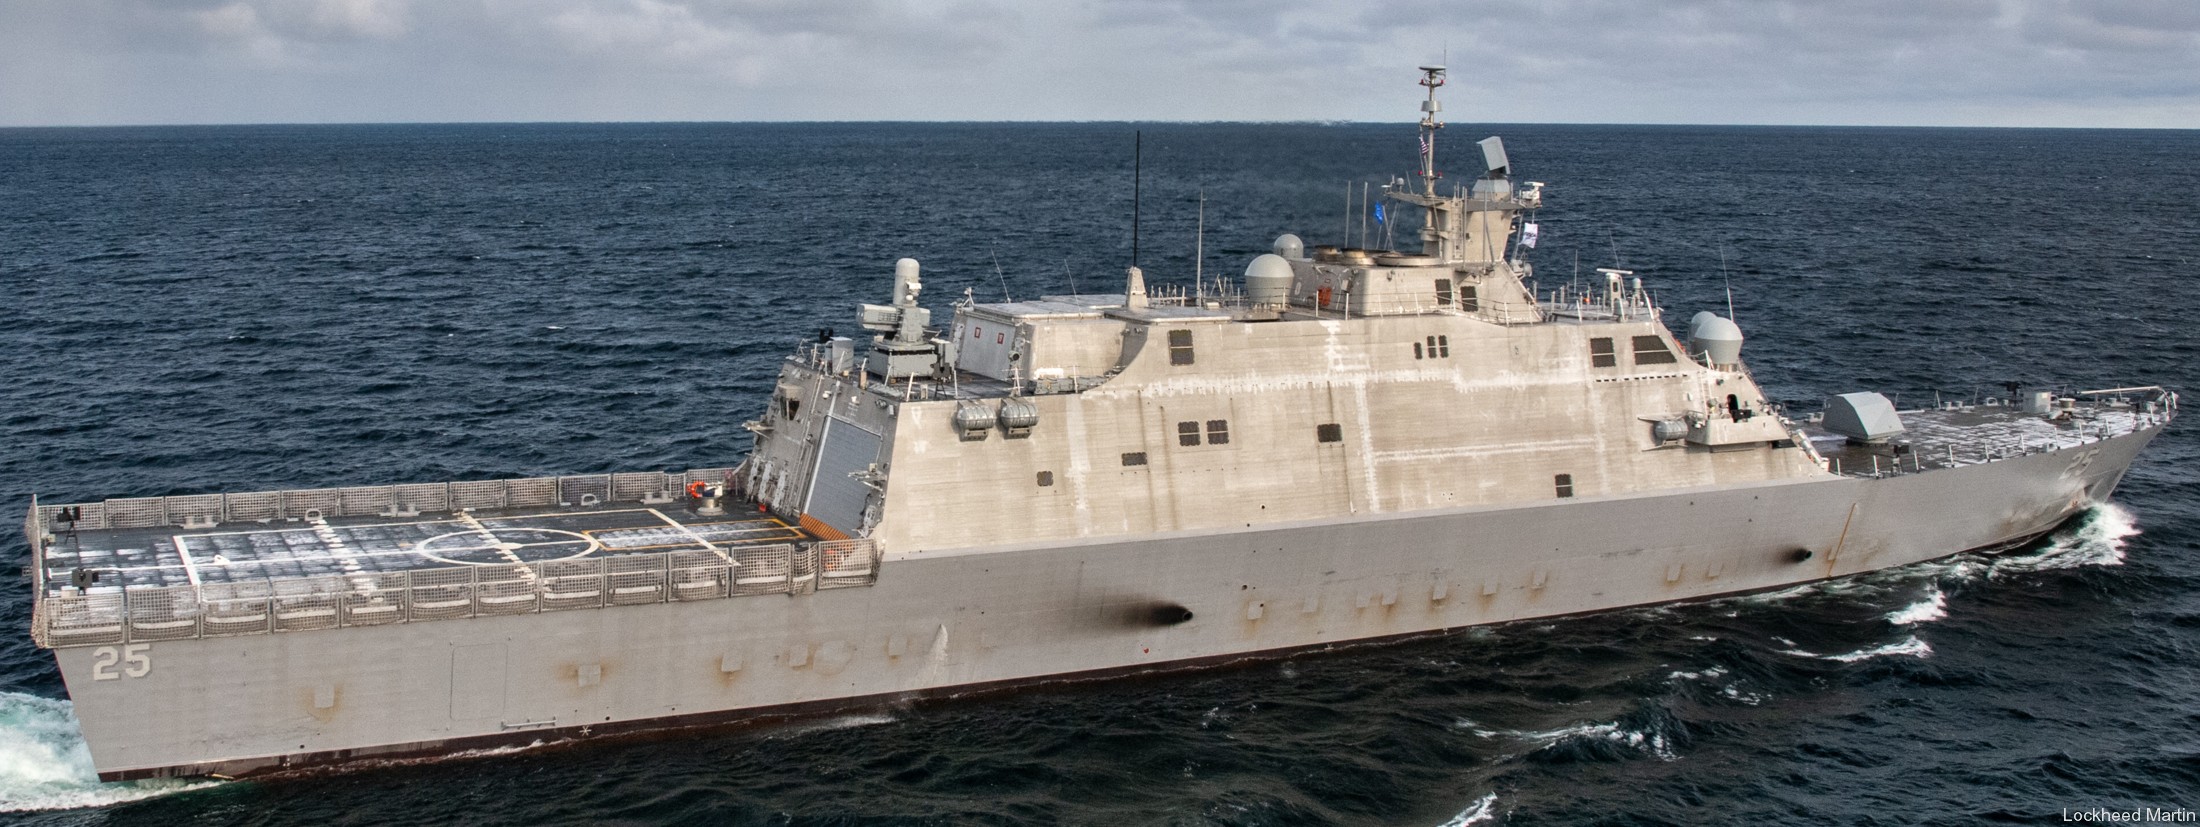 lcs-25 uss marinette freedom class littoral combat ship us navy trials marinette fincantieri 16